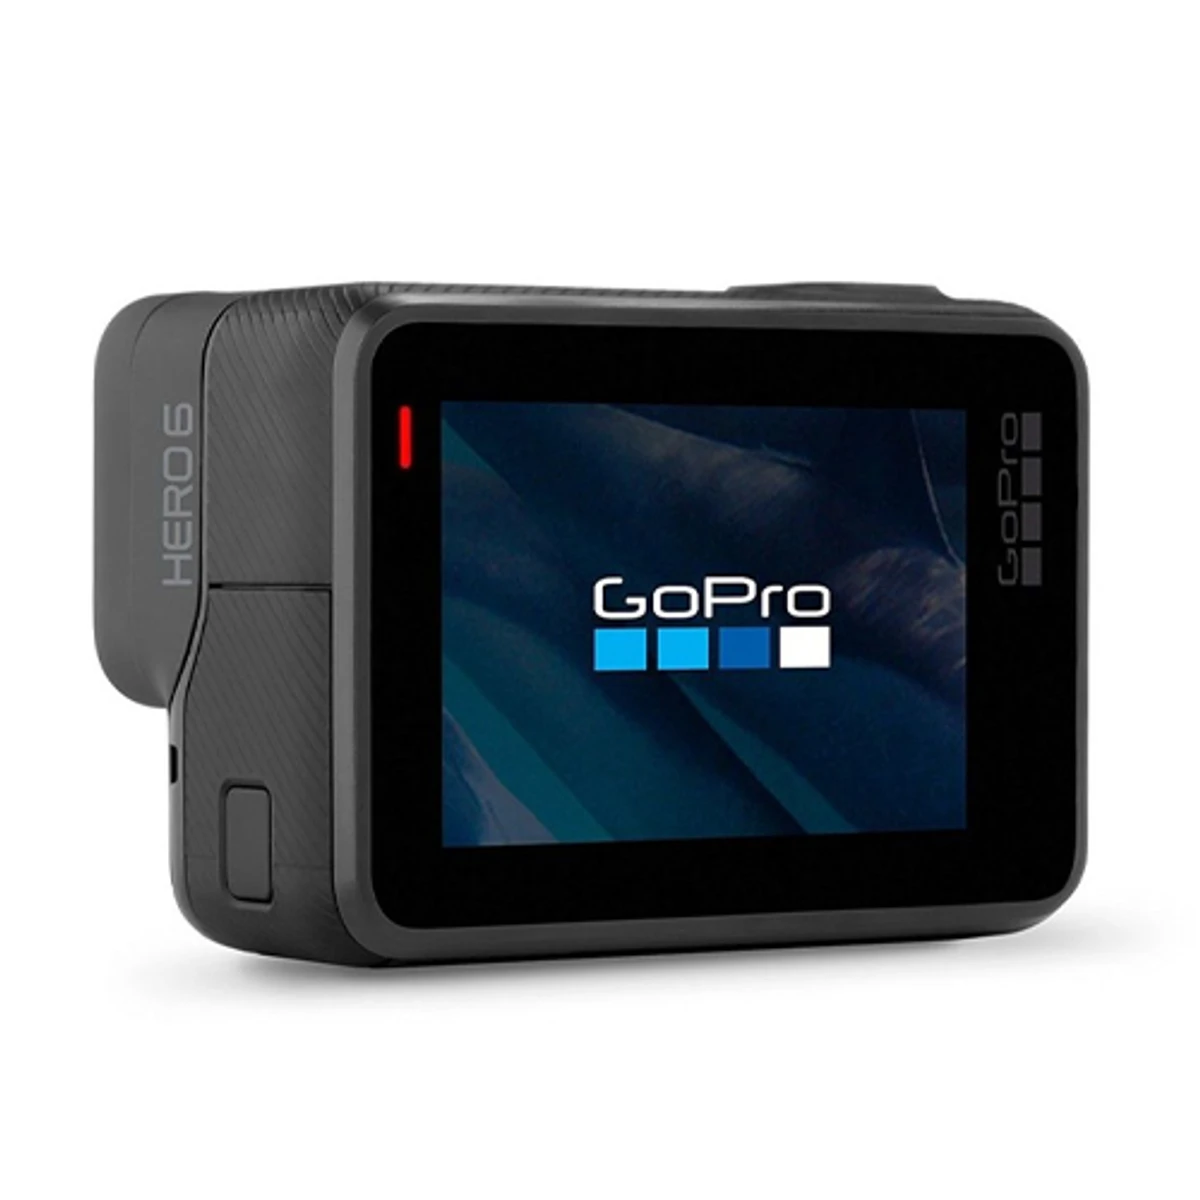 GoPro Hero 6 Black - 4K Ultra HD Action Camera